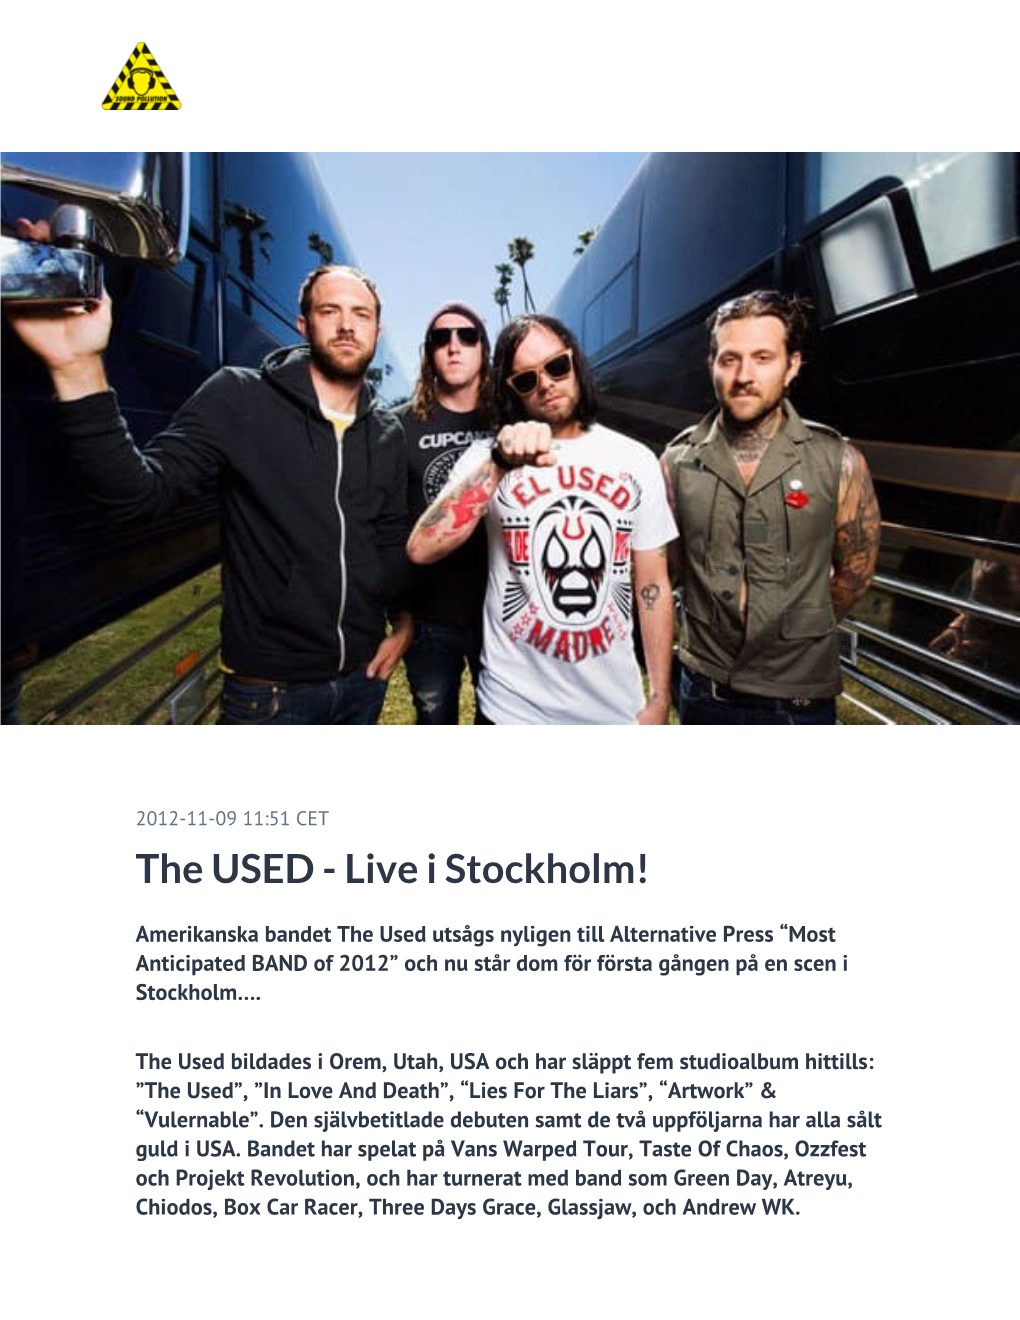 The USED - Live I Stockholm!